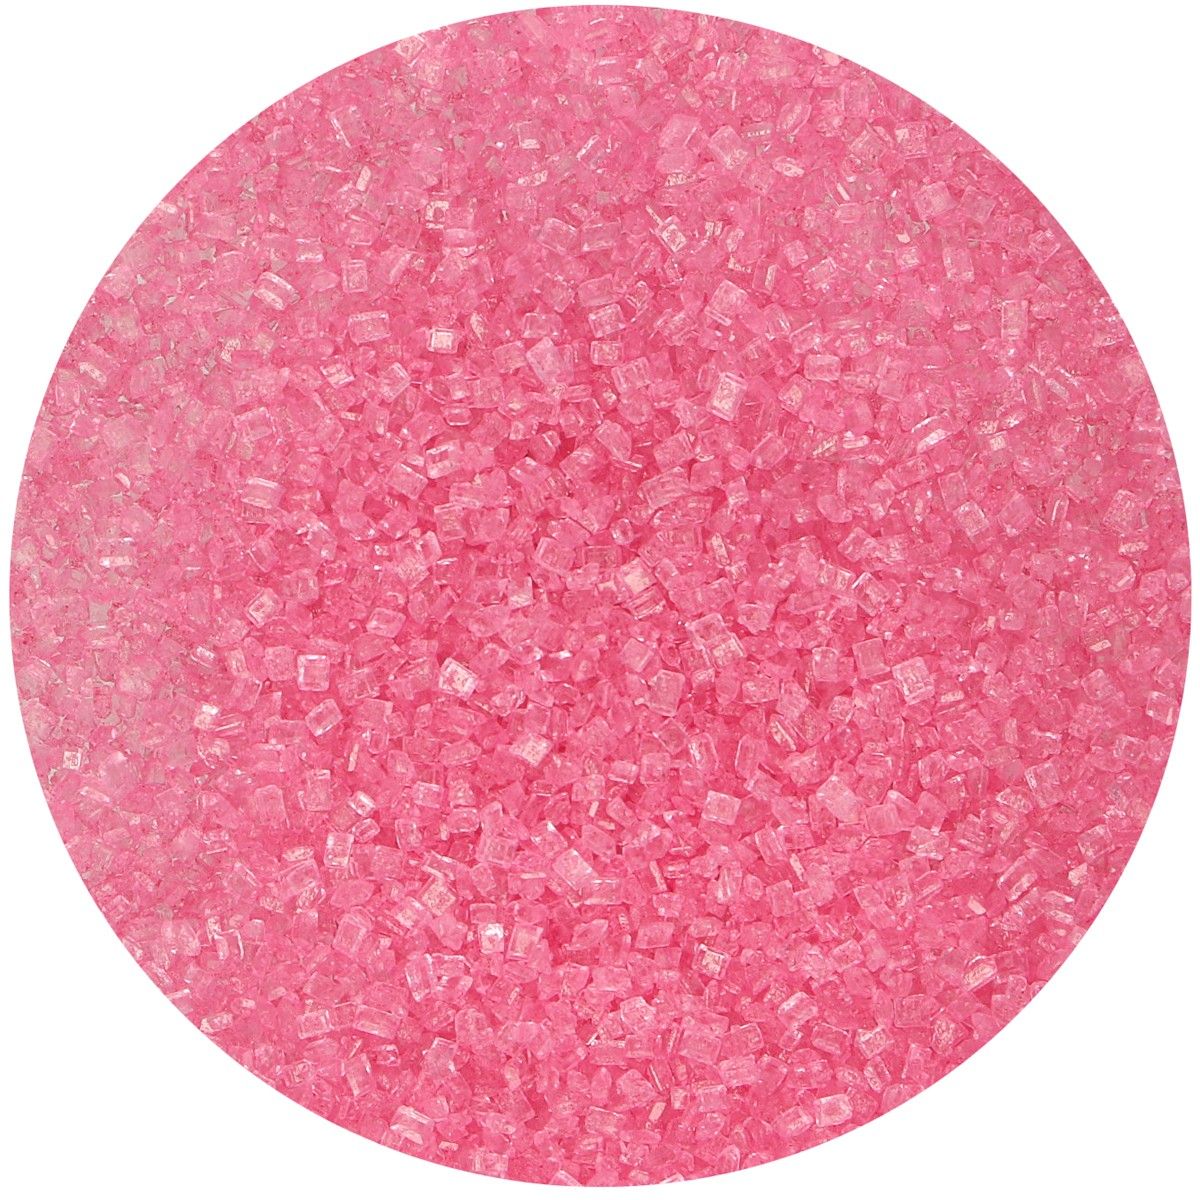 Kristallzucker rosa 80g